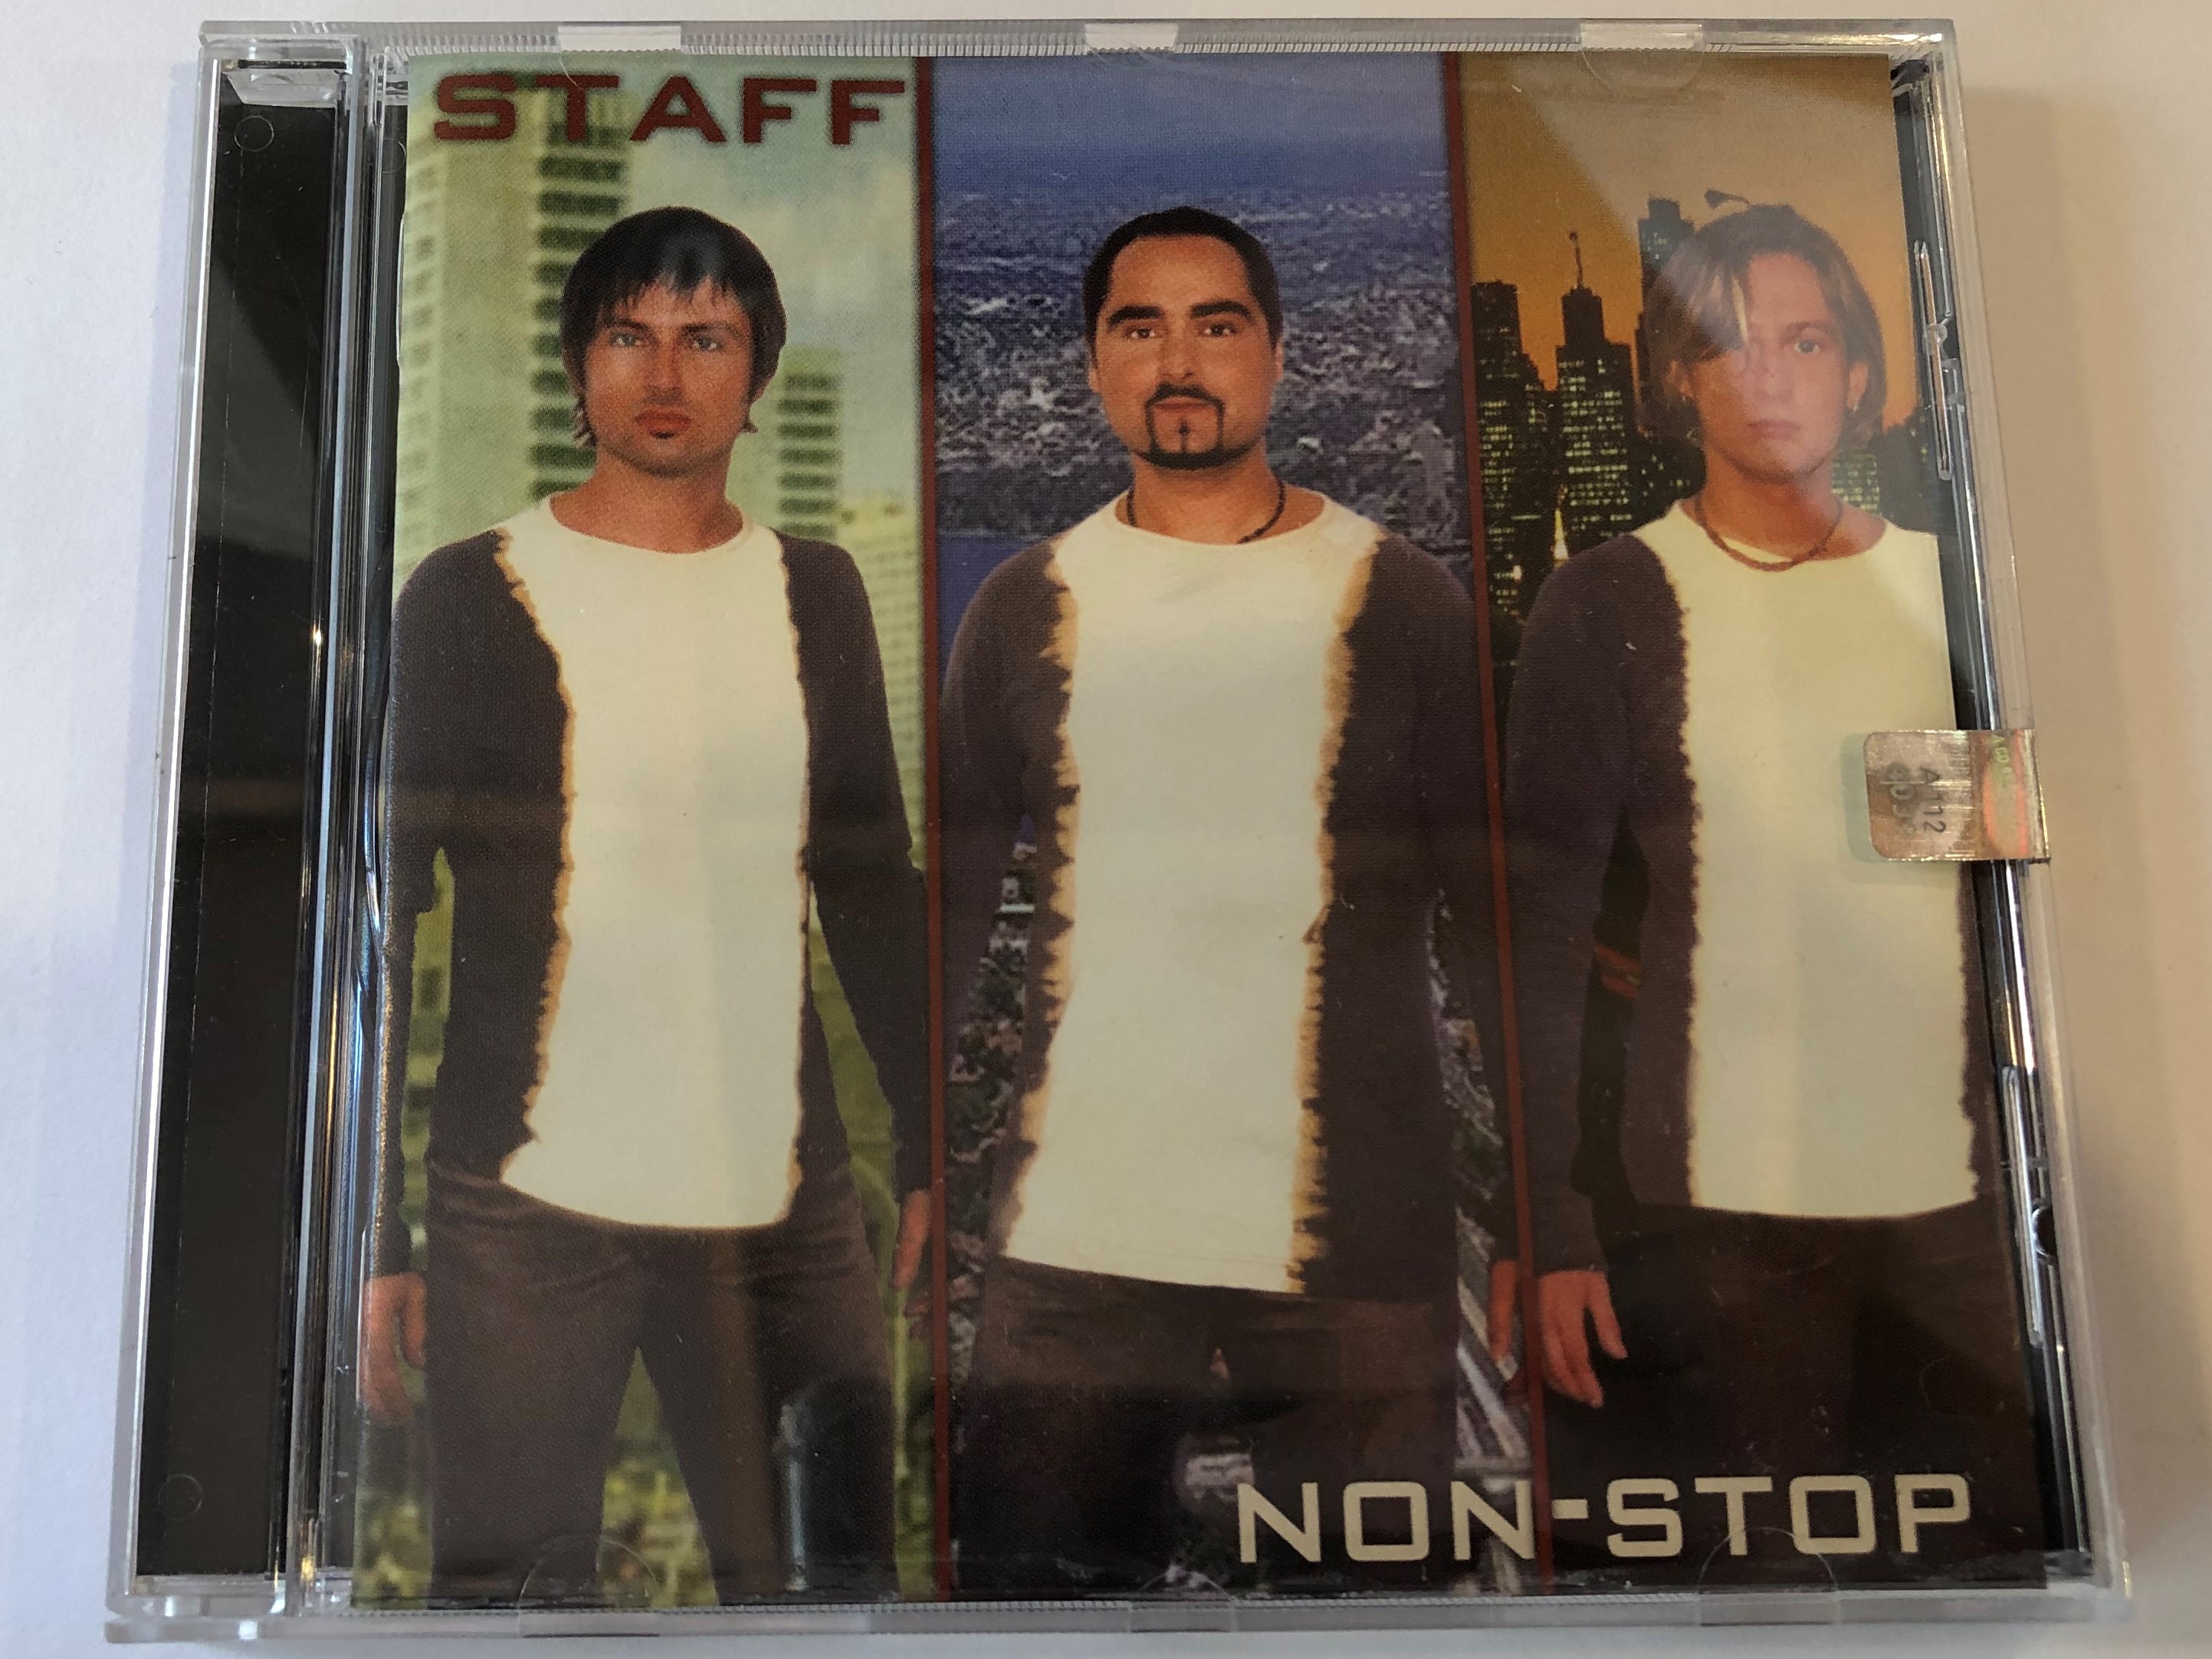 staff-non-stop-hungaroton-audio-cd-2001-hcd-71078-1-.jpg